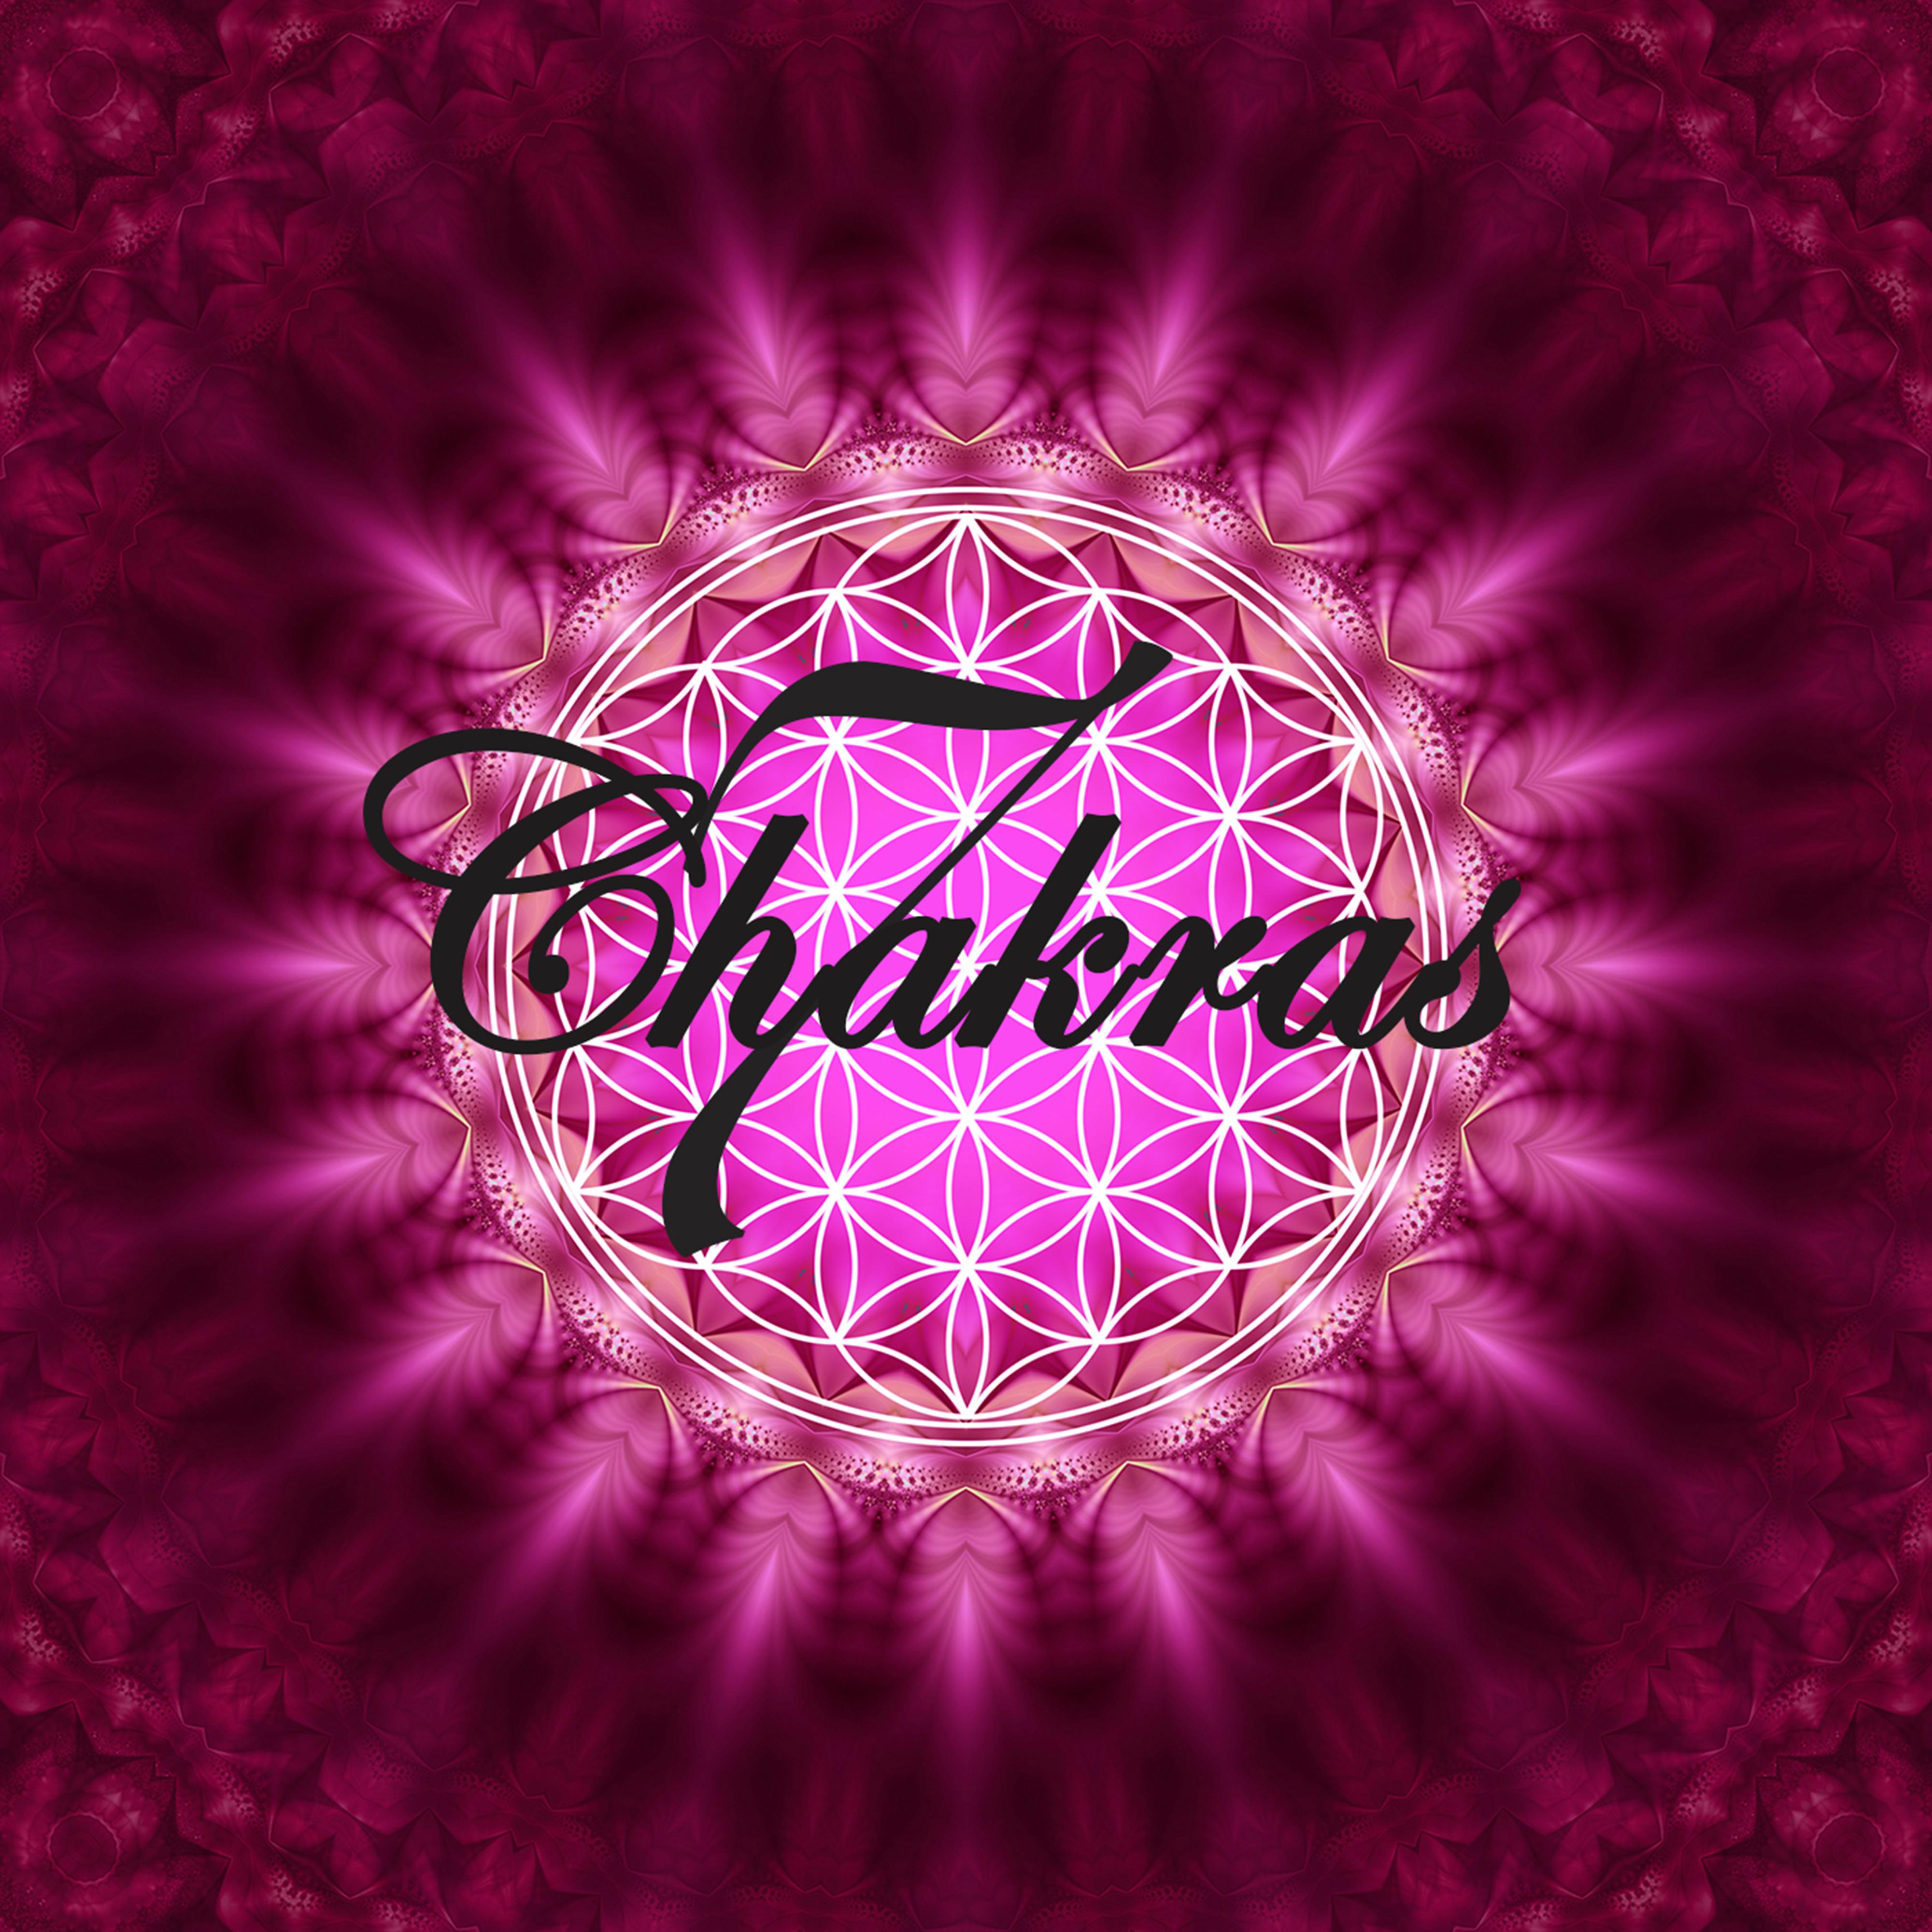 Crown Chakra - Spirituality, Divine Bliss Purple (Sahasrara Chakra)